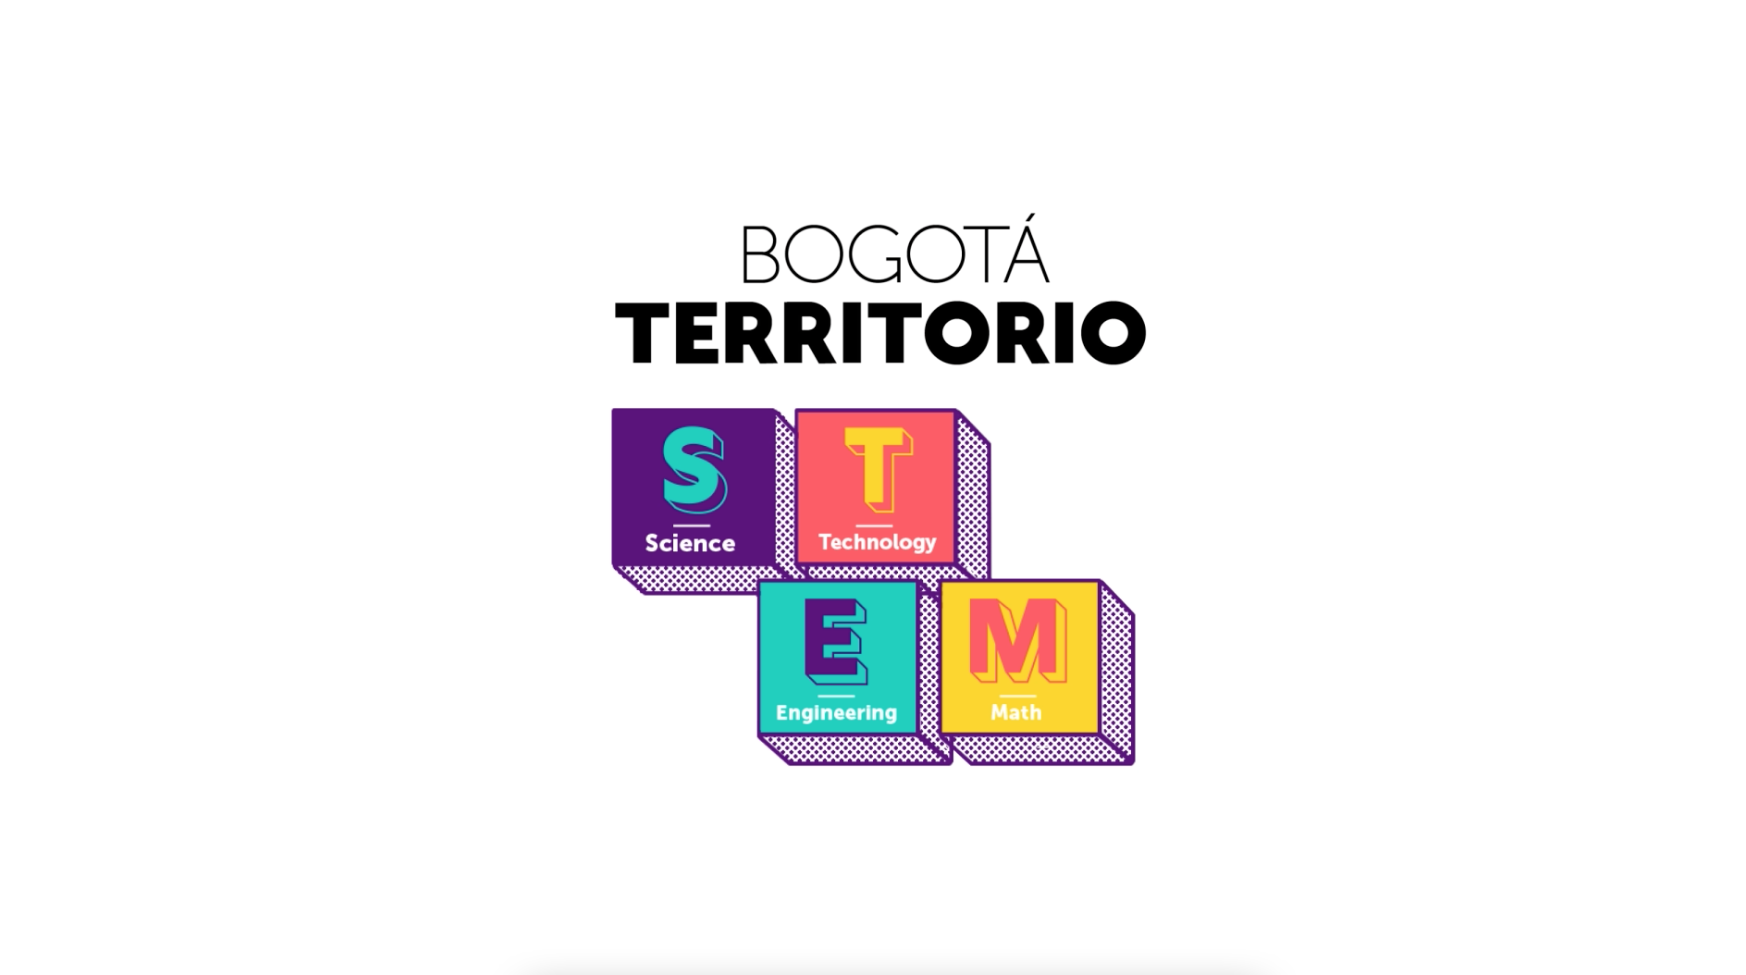 Bogotá se declara como territorio STEM